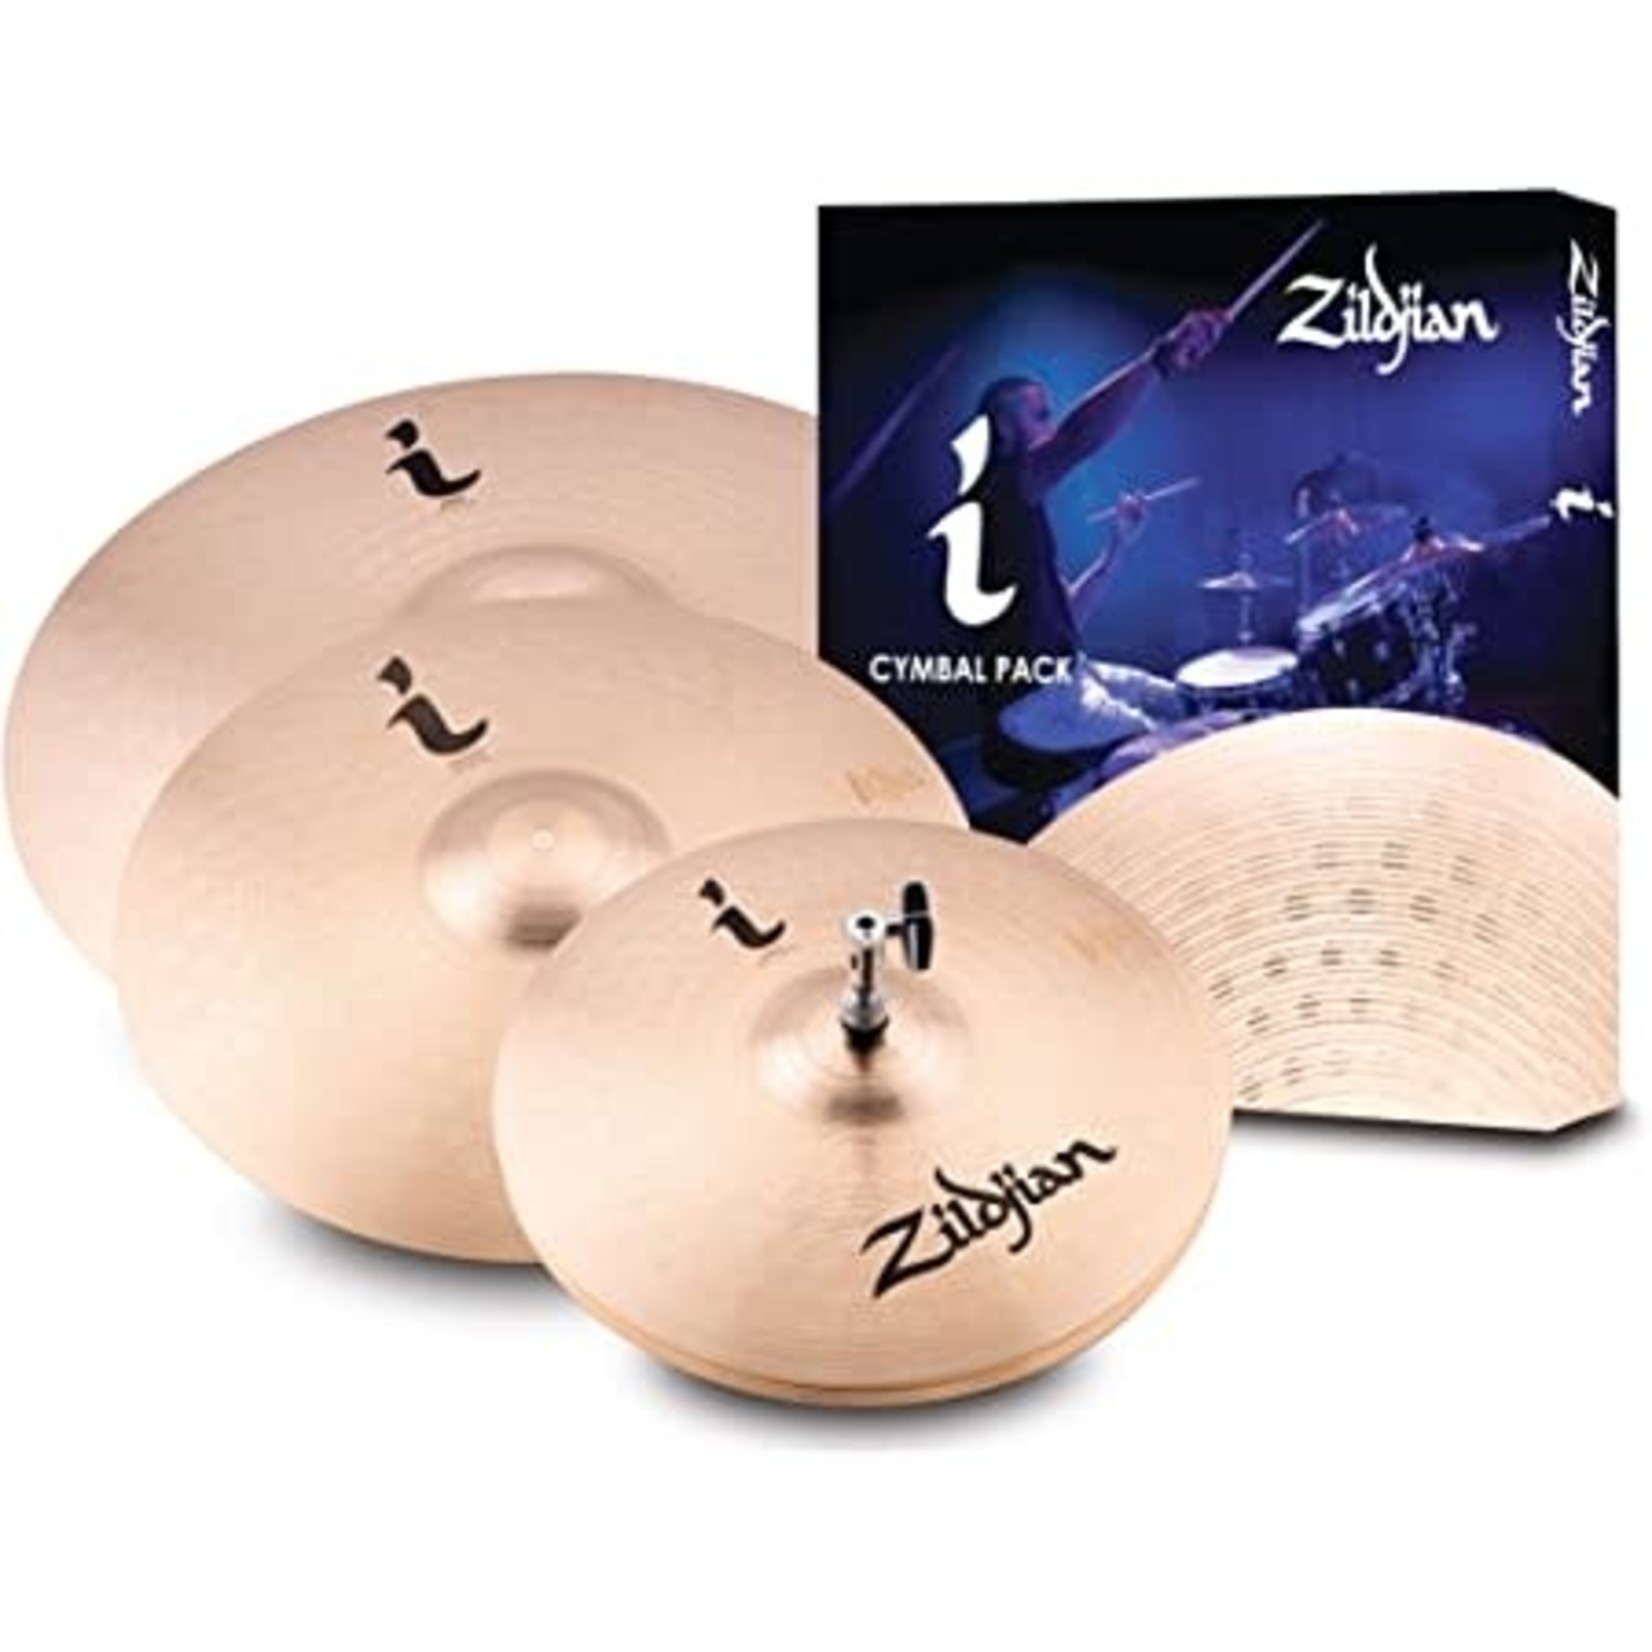 Zildjian Zildjian I Series Standard Gig Cymbal Pack (14/16/20) ILHSTD